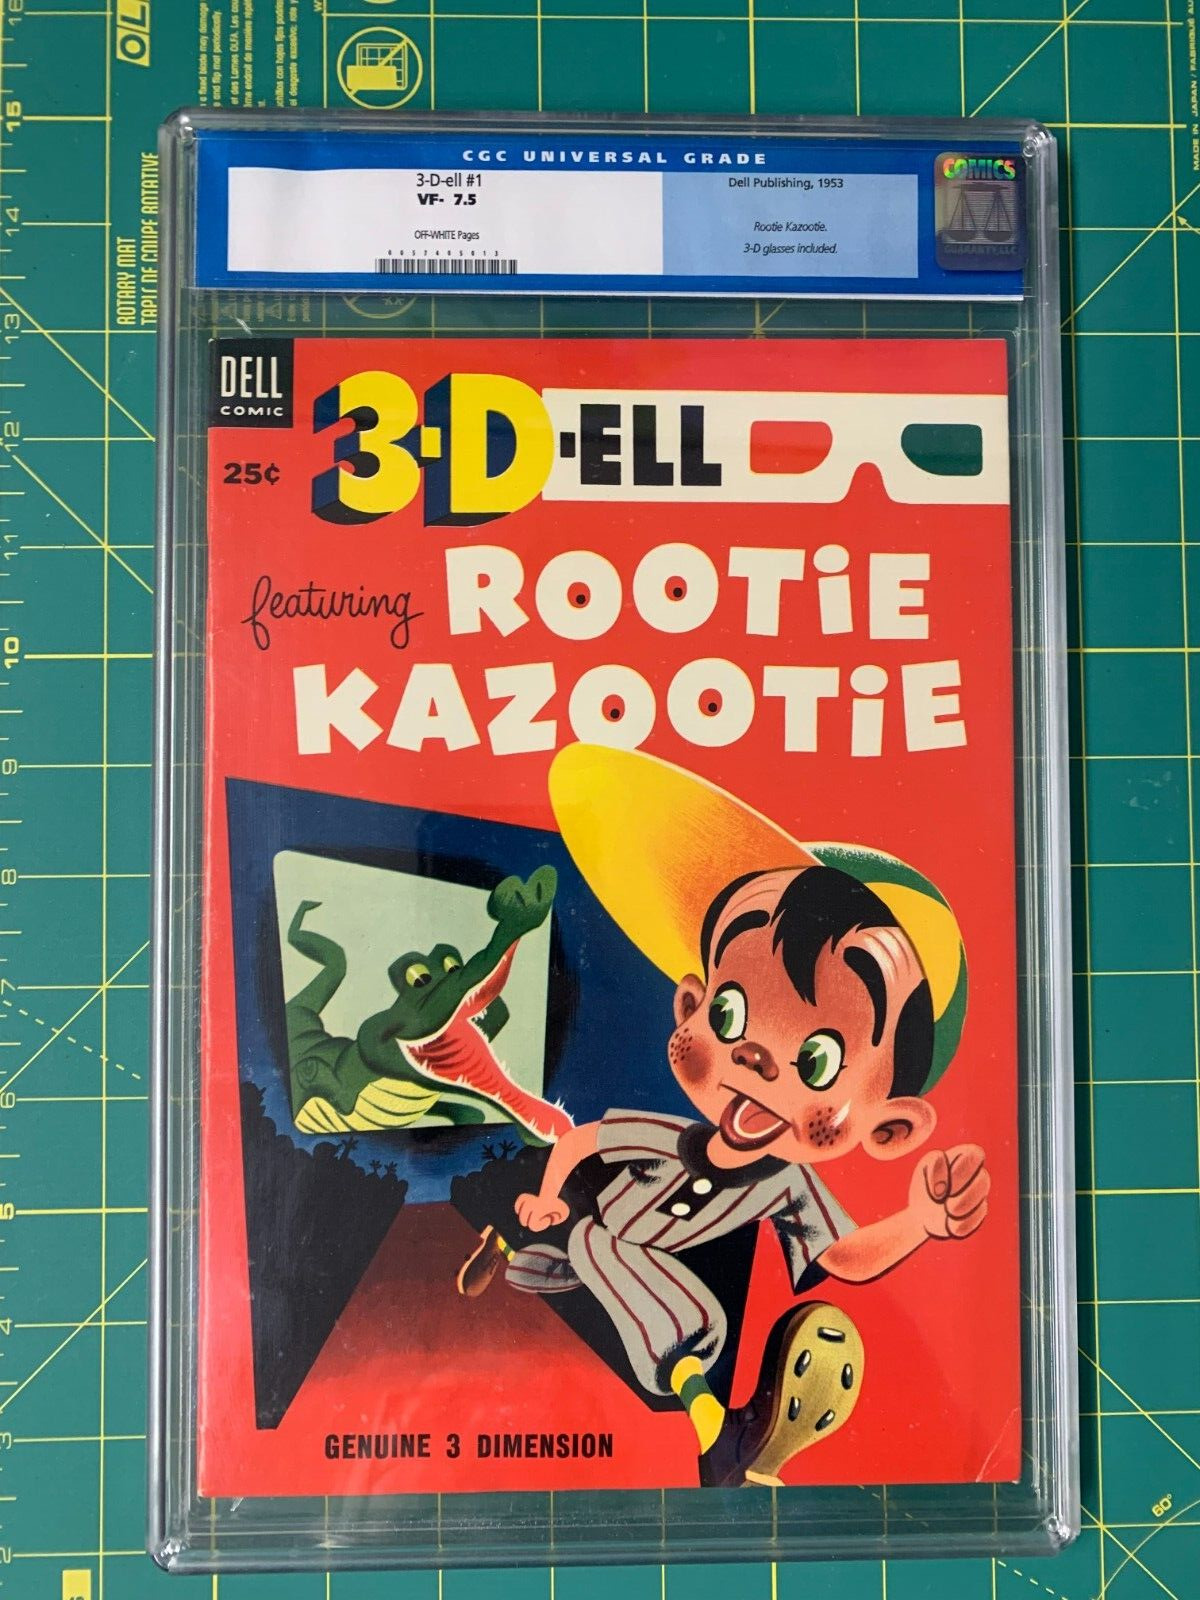 3-D-ELL #1 - 1953 - Rootie Kazootie - 3D Glasses Included - CGC 7.5 - (7135)